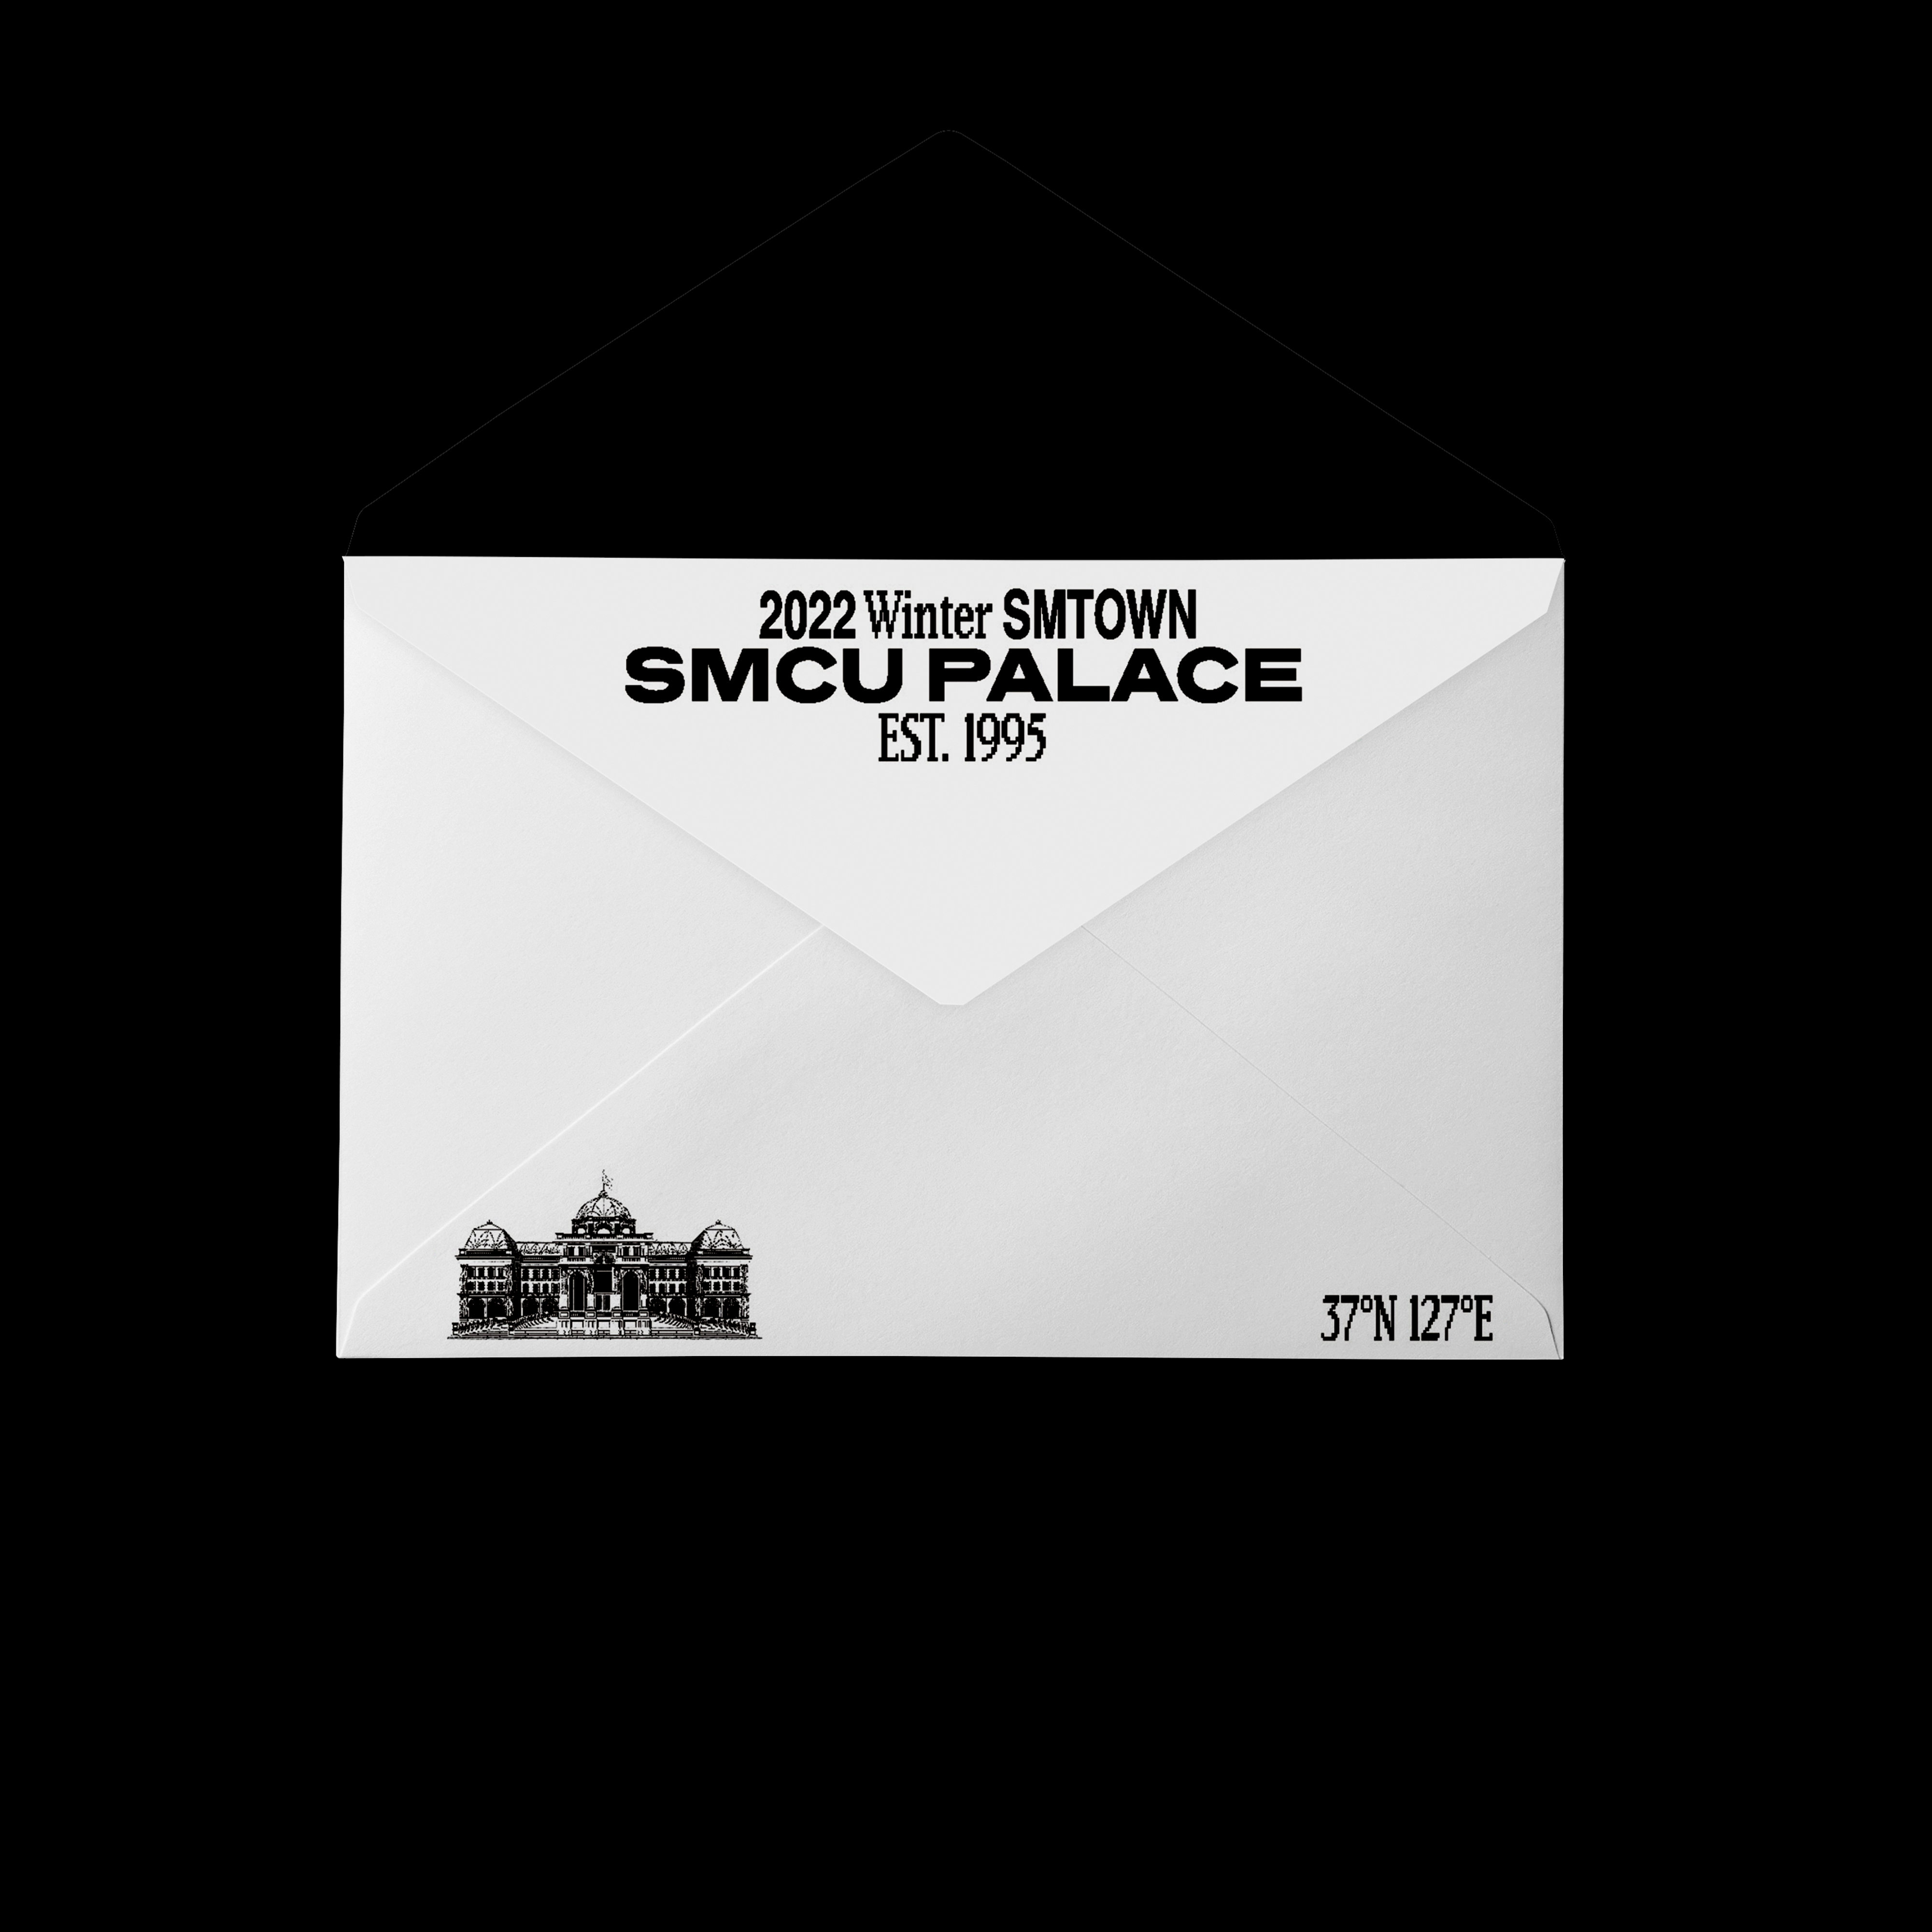 [全款 裸专] Super Junior - 2022 Winter SMTOWN : SMCU PALACE (GUEST. SUPER JUNIOR) (Membership Card Ver.) _利特吧_TeukBar